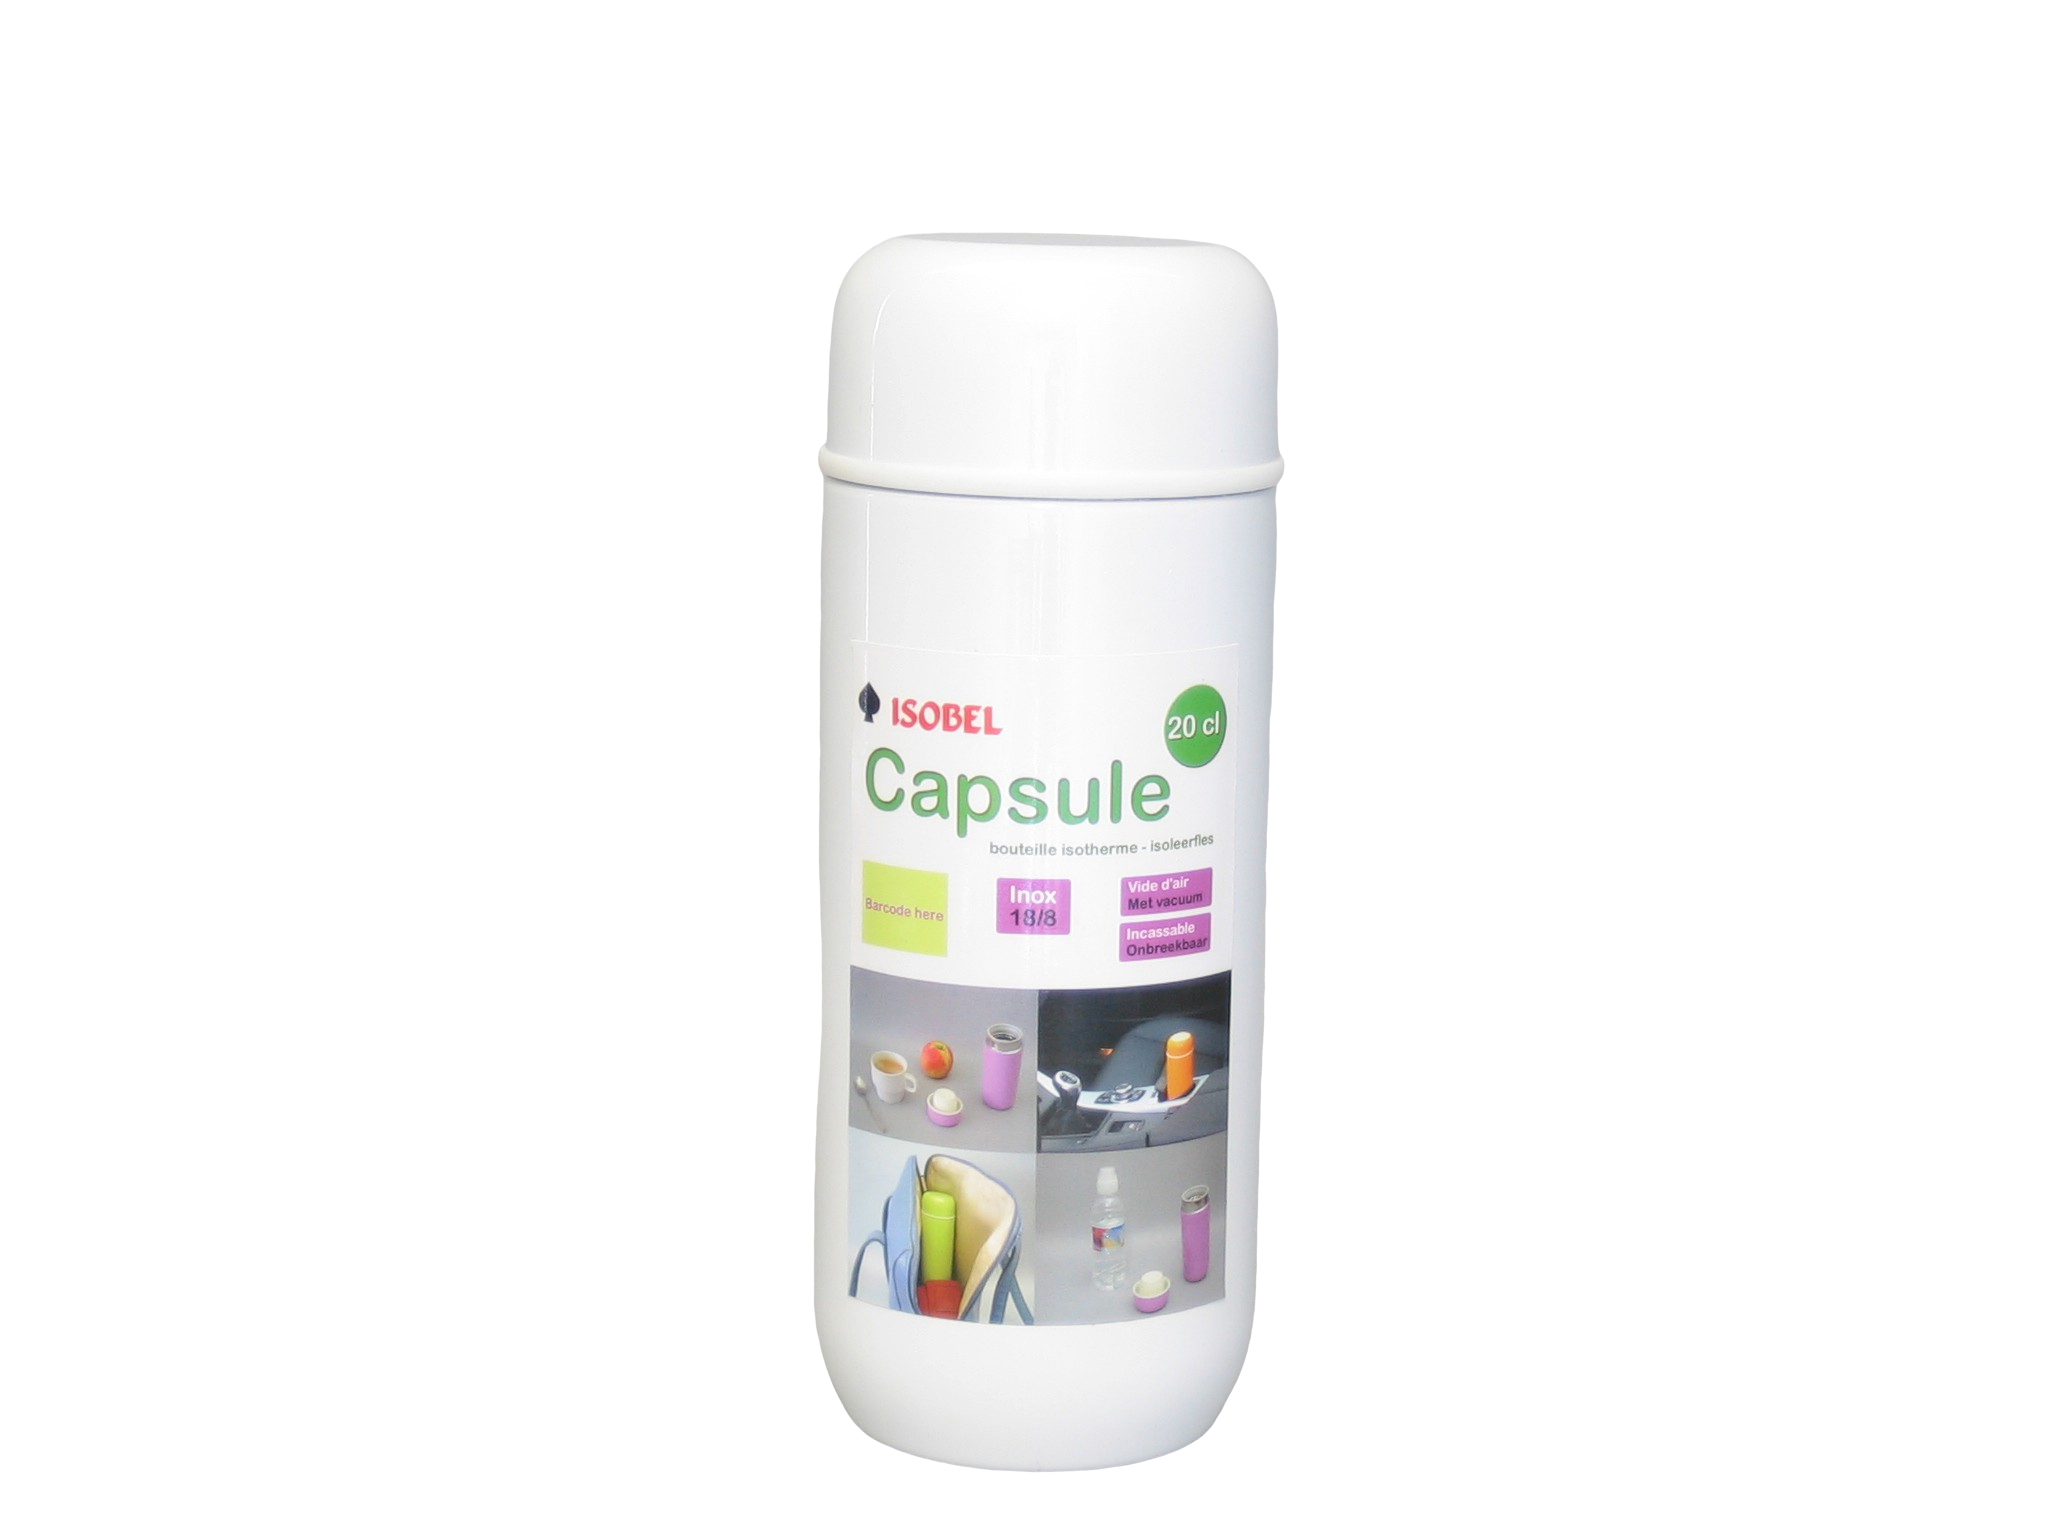 CAPSULE-001 - Isoleerfles inox onbreekbaar wit 0.20 L - Isobel